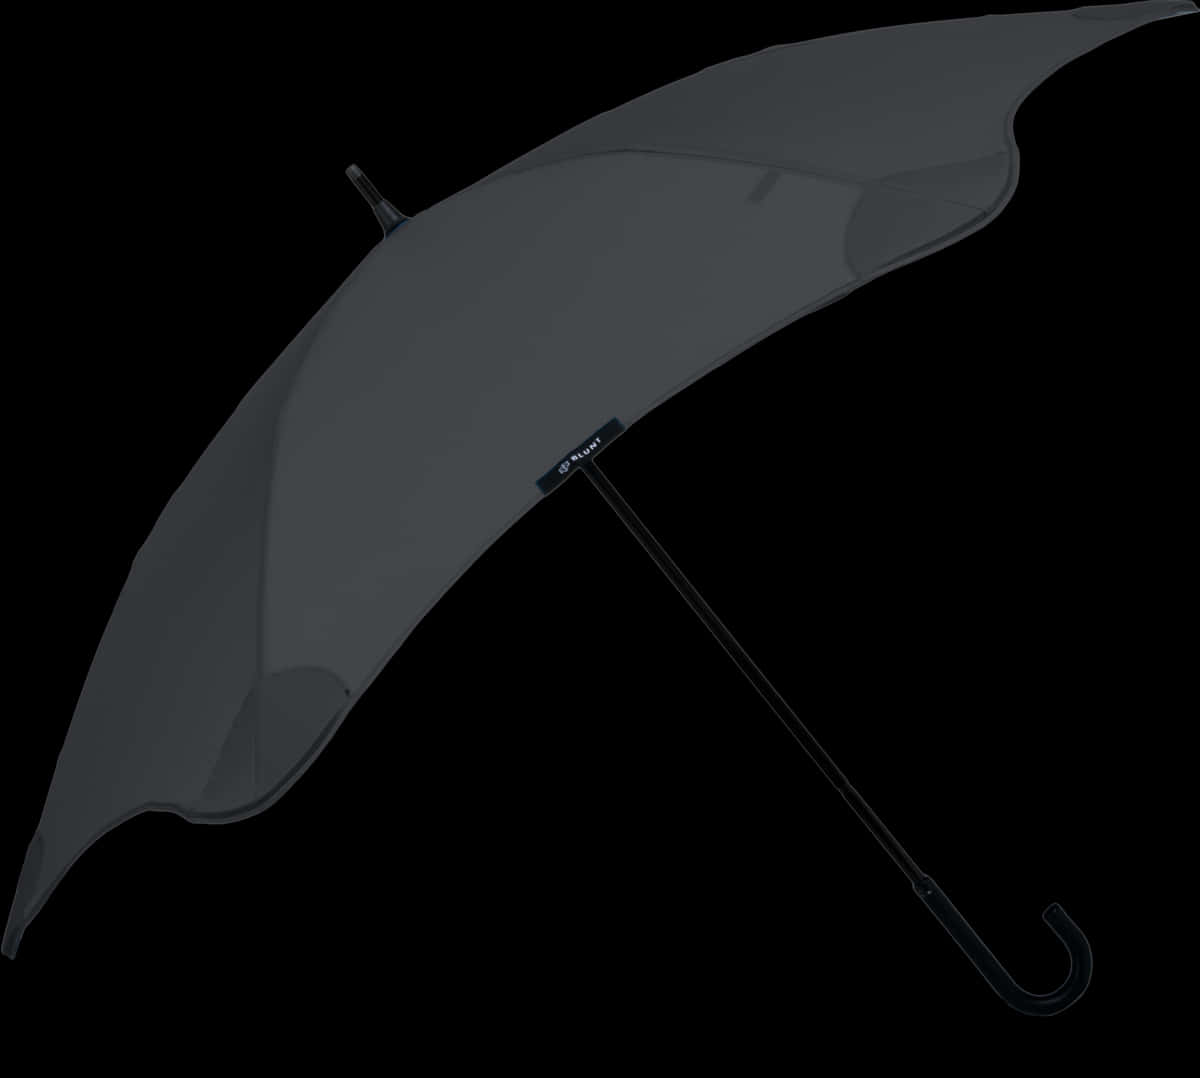 A Black Umbrella With A Black Background